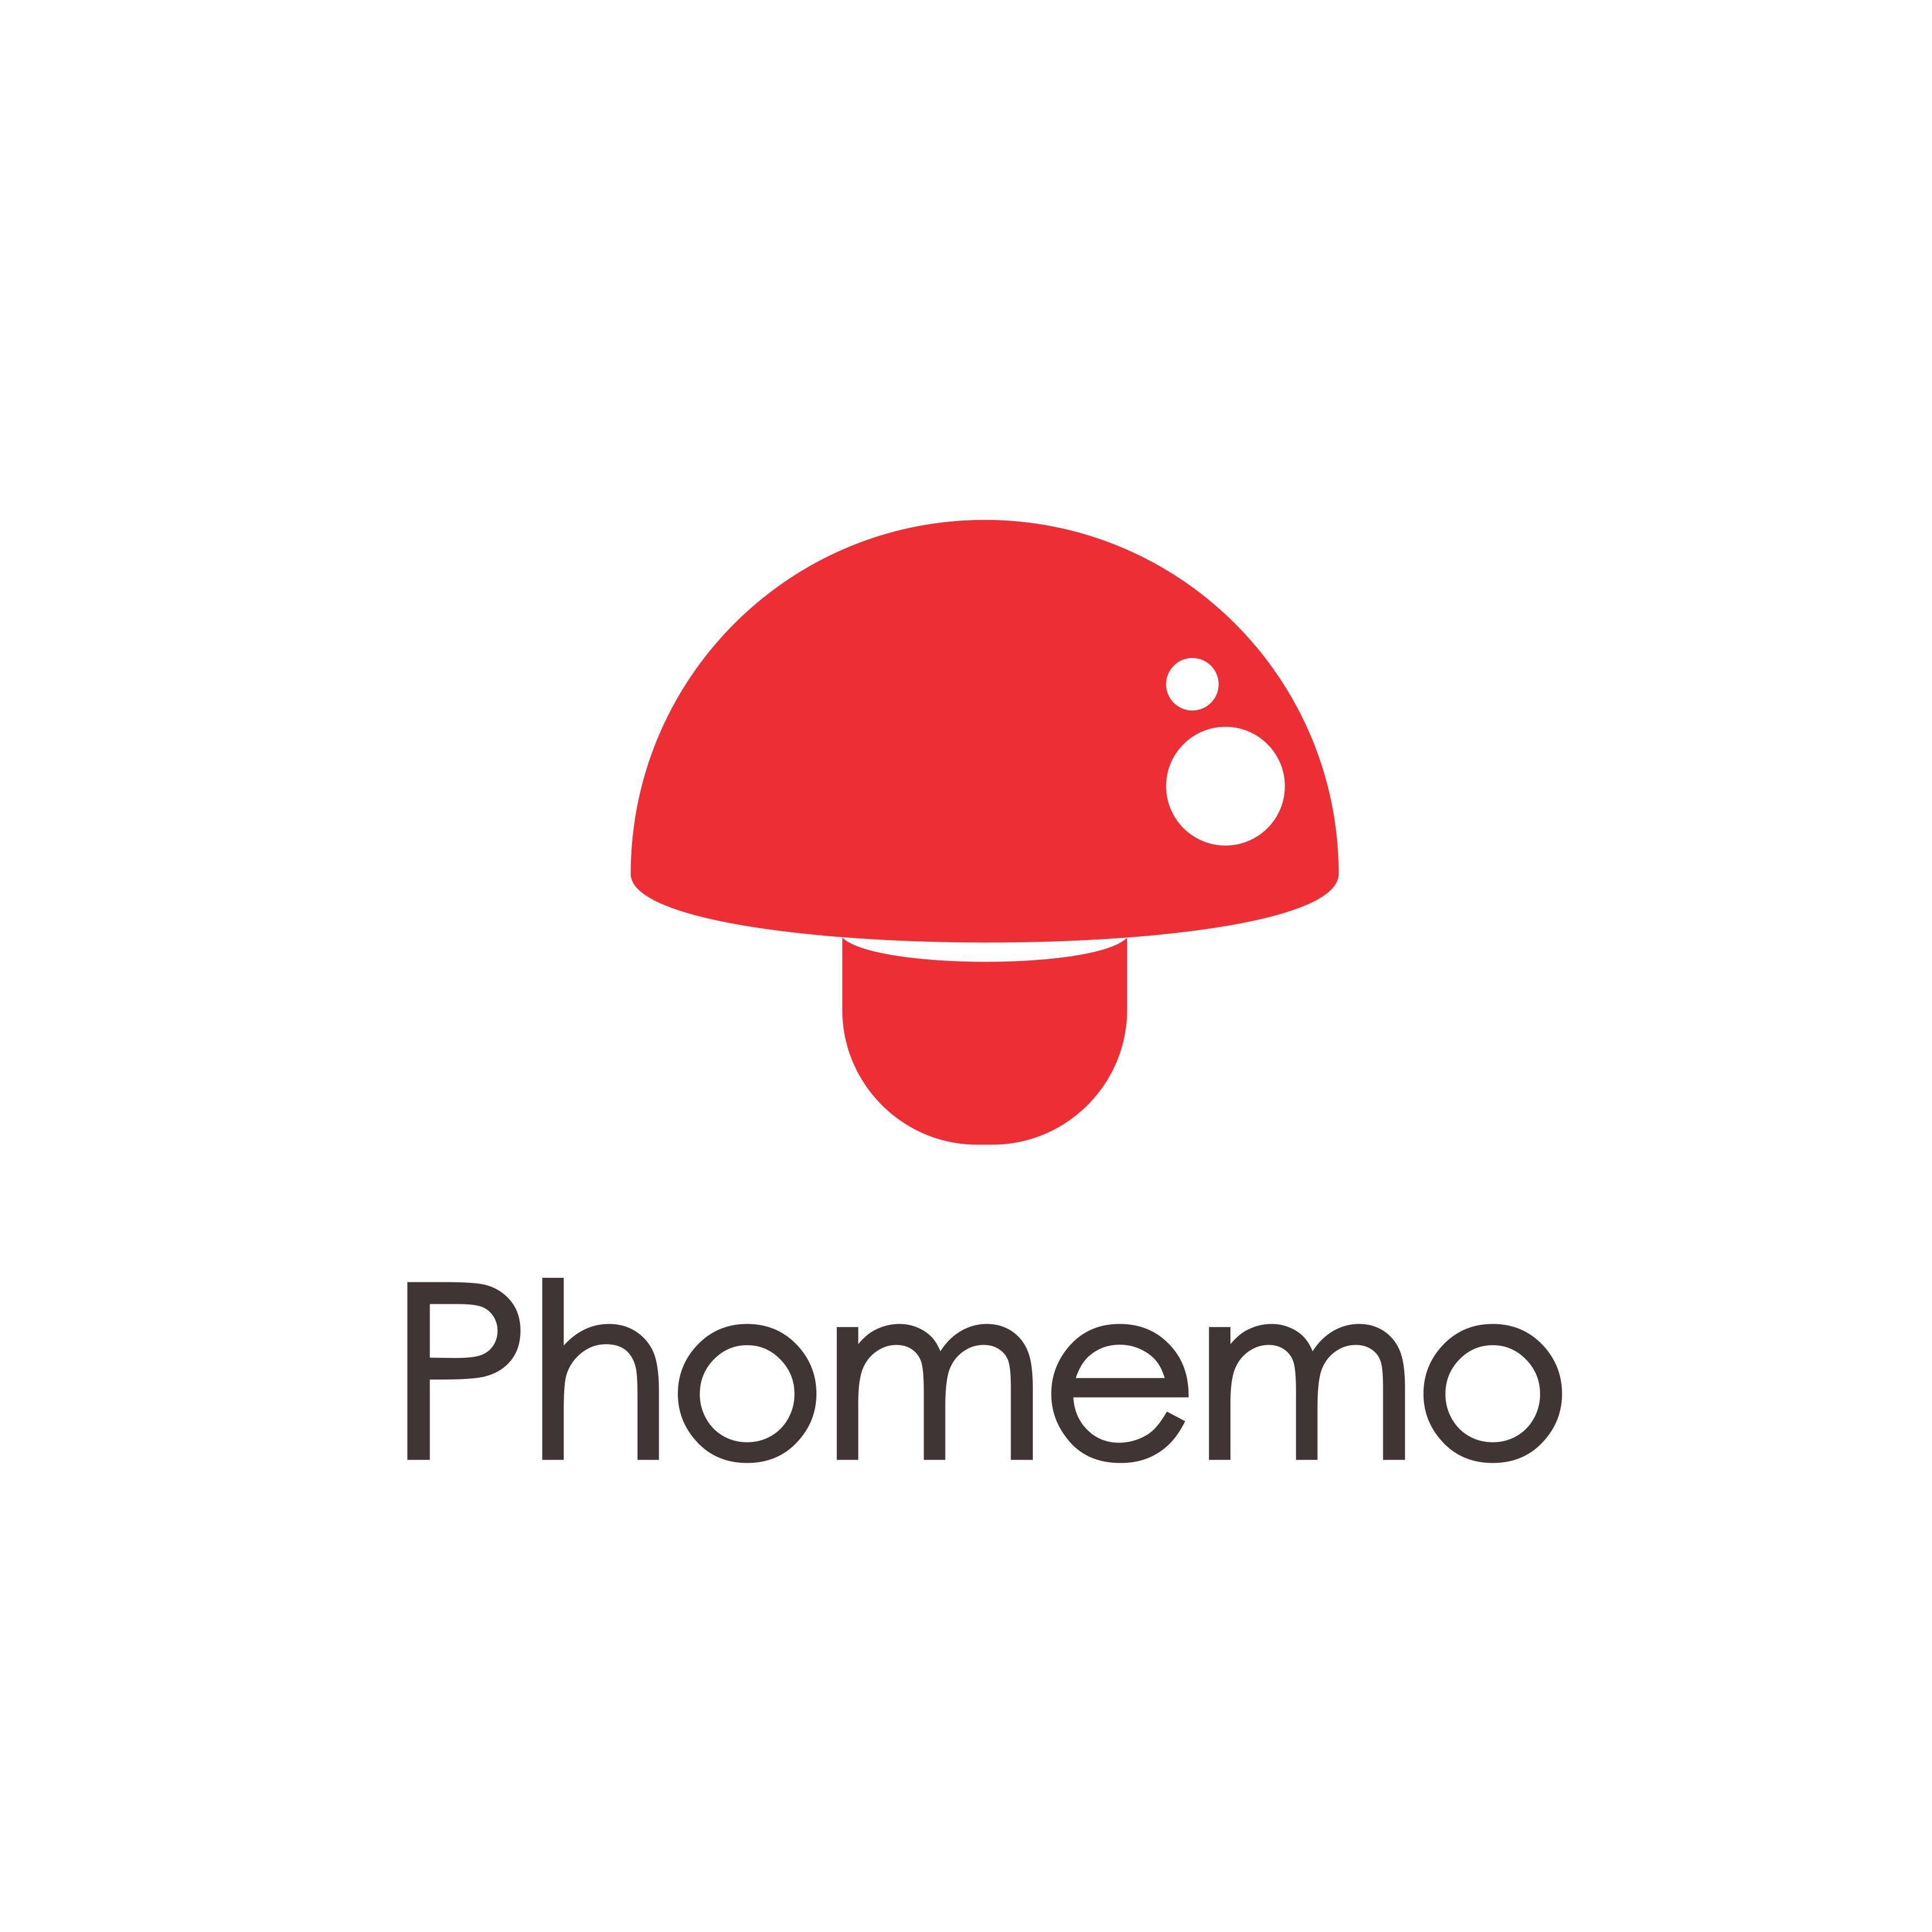 phomemo logo.jpg